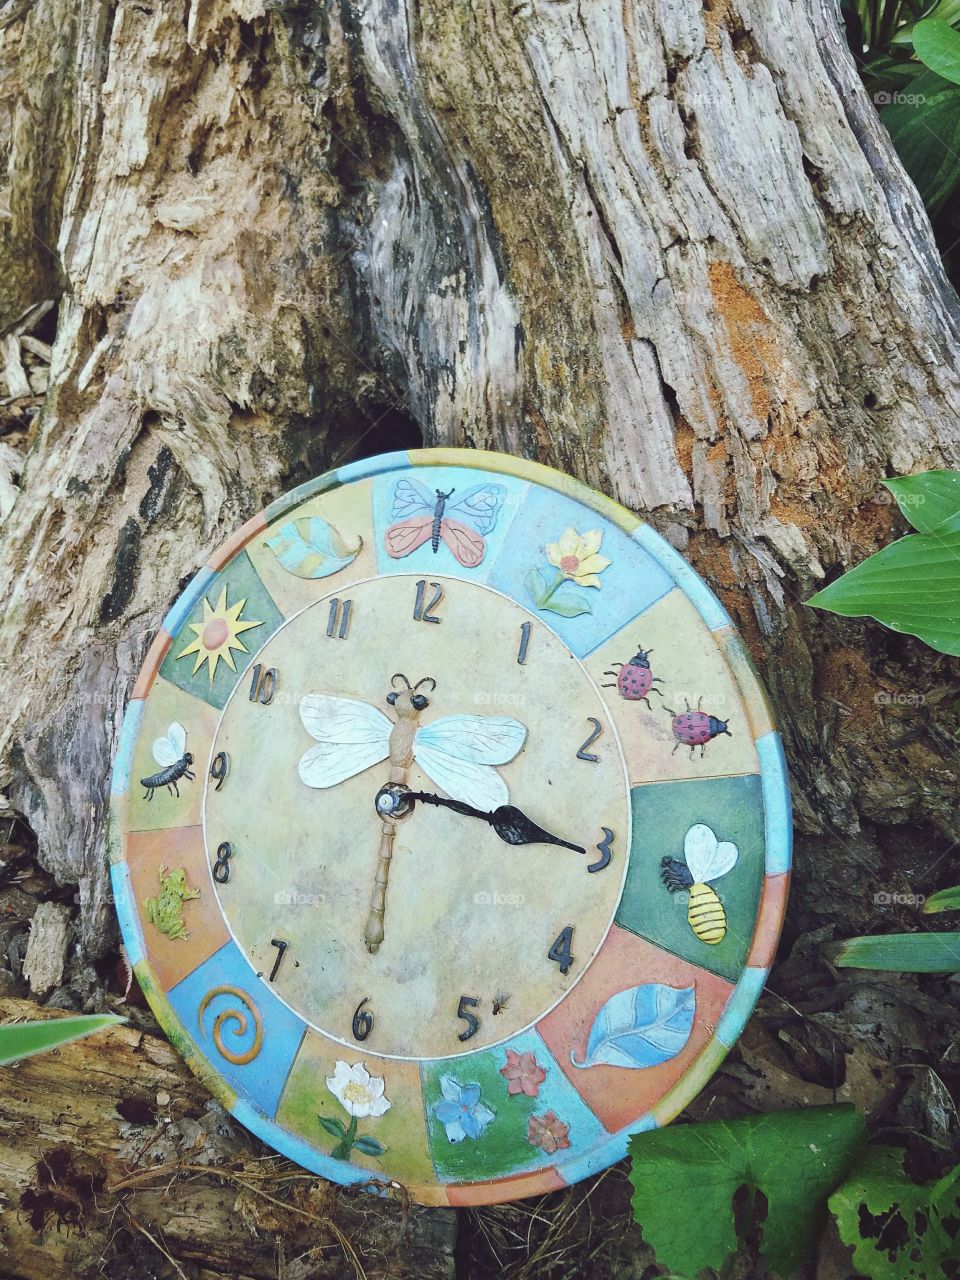 A clock leans against a tree stump